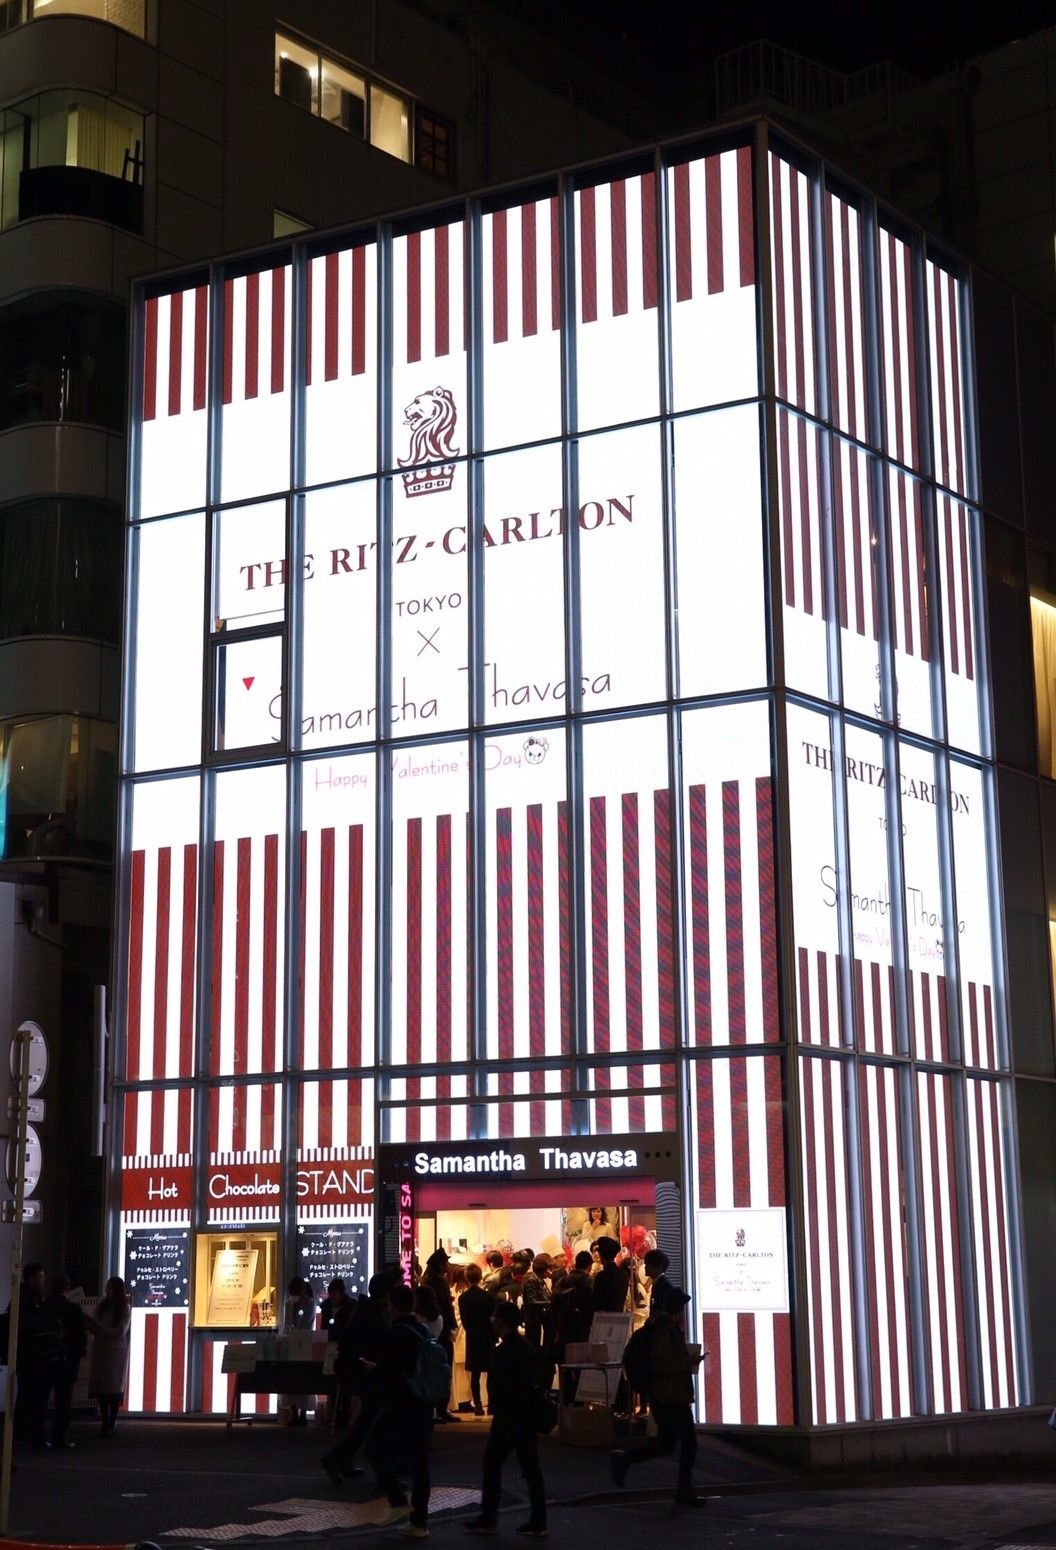 The Ritz Carlton Tokyo Samantha Thavasa Sweet Valentine S Day 大好評につきスペシャルコラボ第二弾開催 オリジナルコラボ4アイテムが新たに登場 株式会社サマンサタバサジャパンリミテッドのプレスリリース